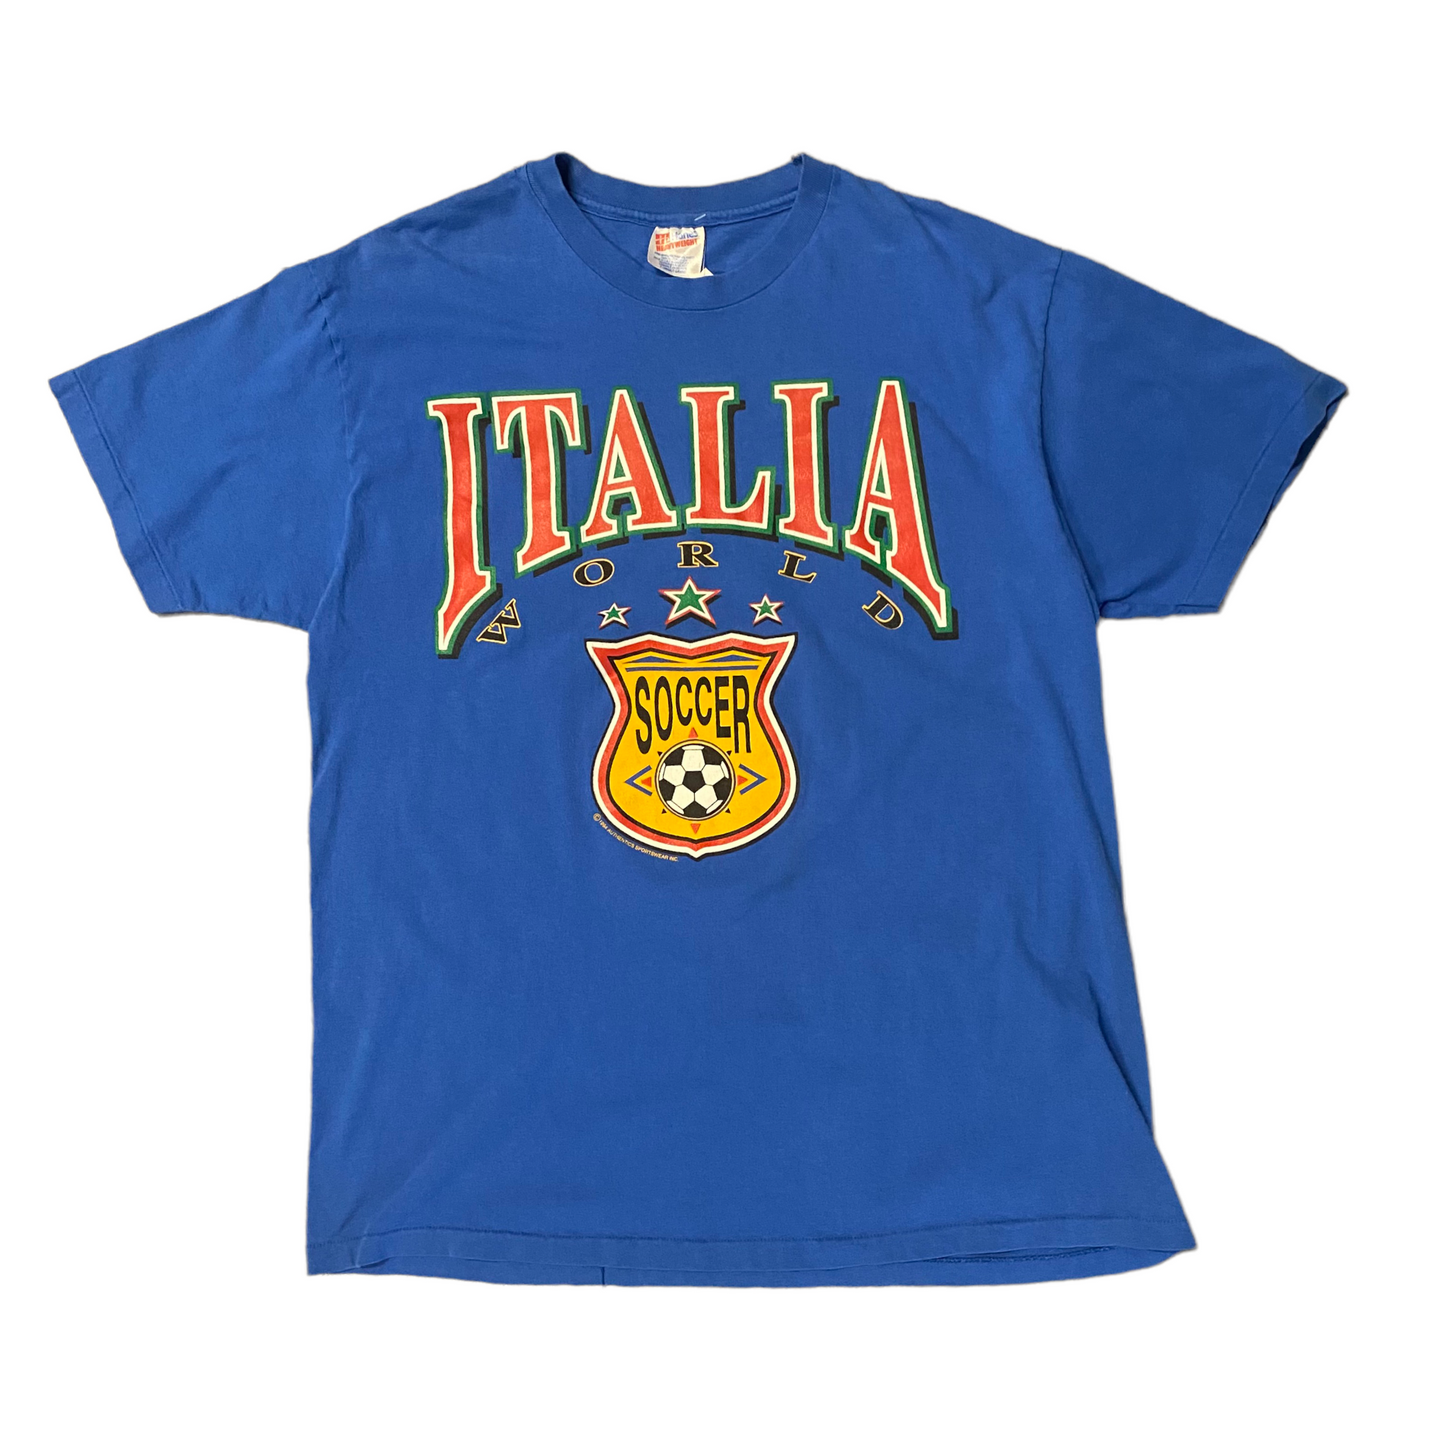 1994 Italia World Soccer Tee XL